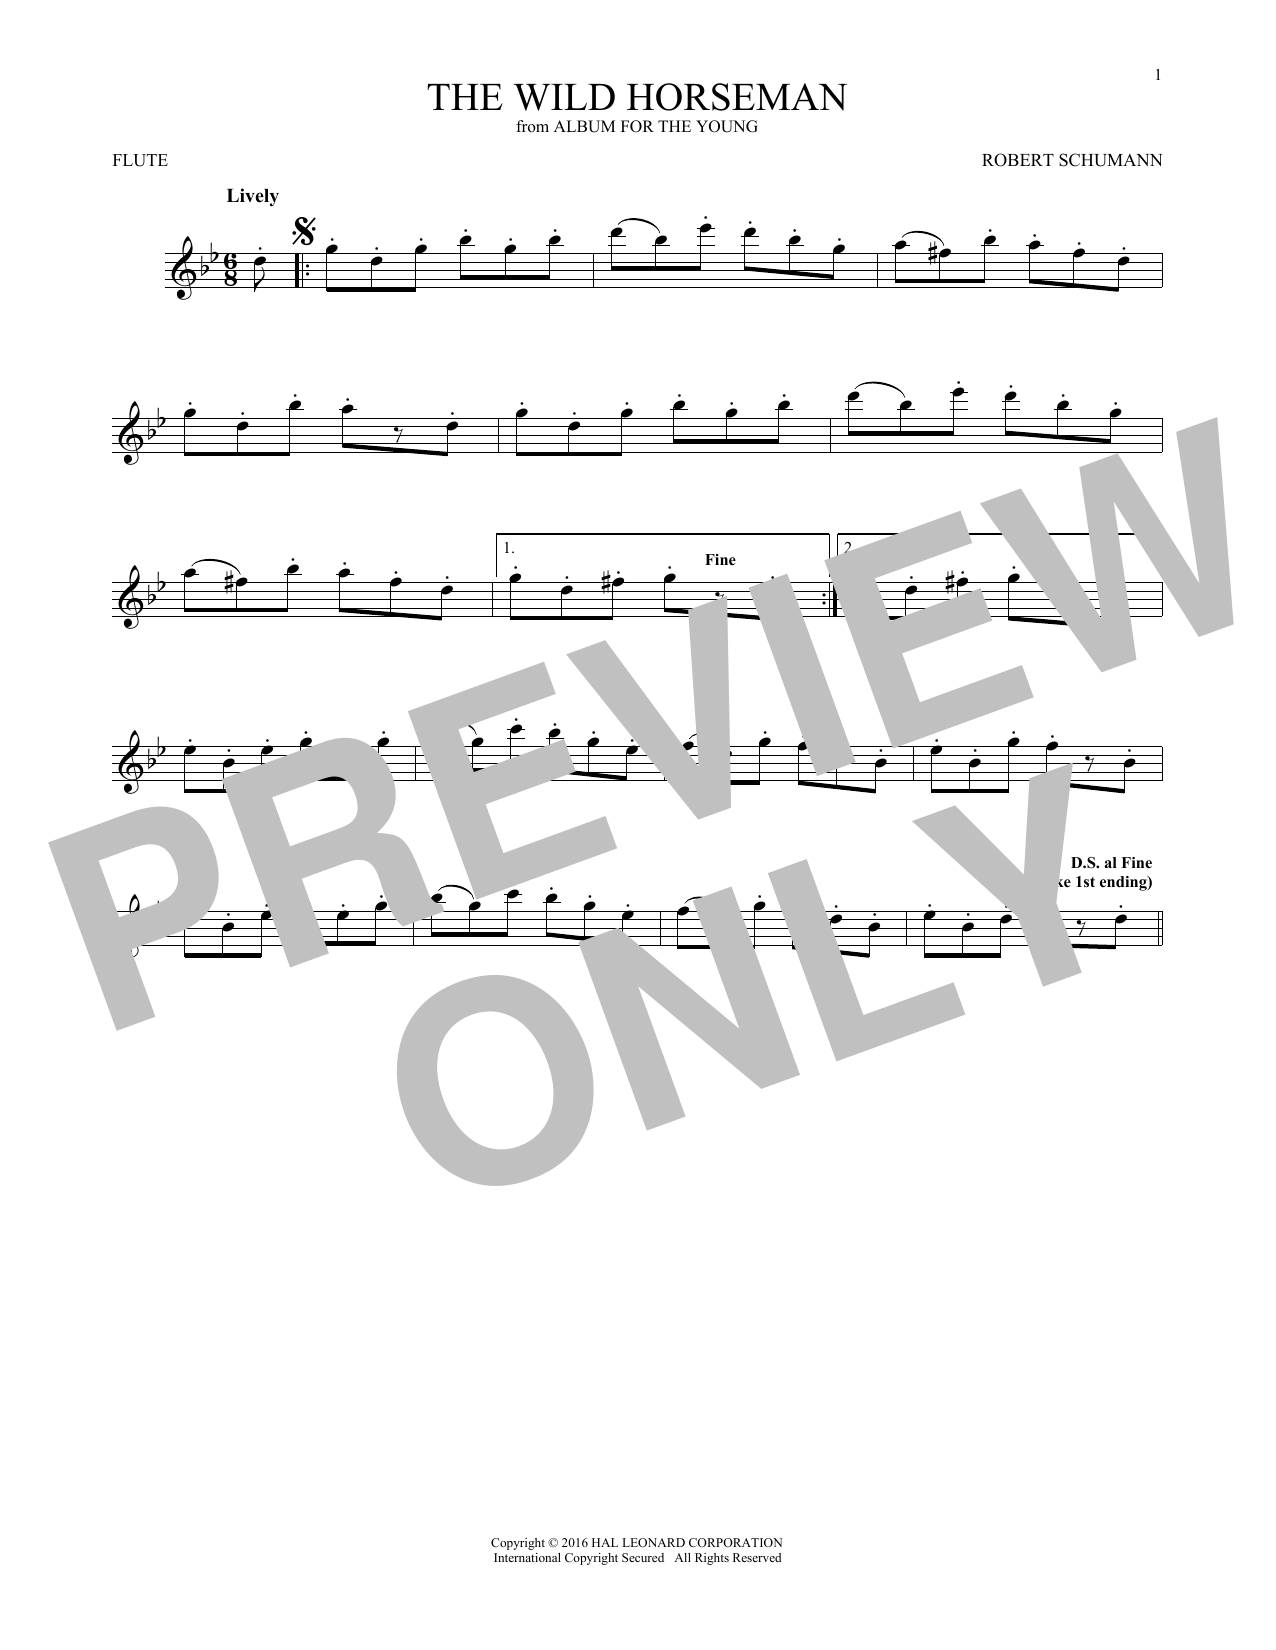 Robert Schumann The Wild Horseman (Wilder Reiter), Op. 68, No. 8 Sheet Music Notes & Chords for Trumpet - Download or Print PDF